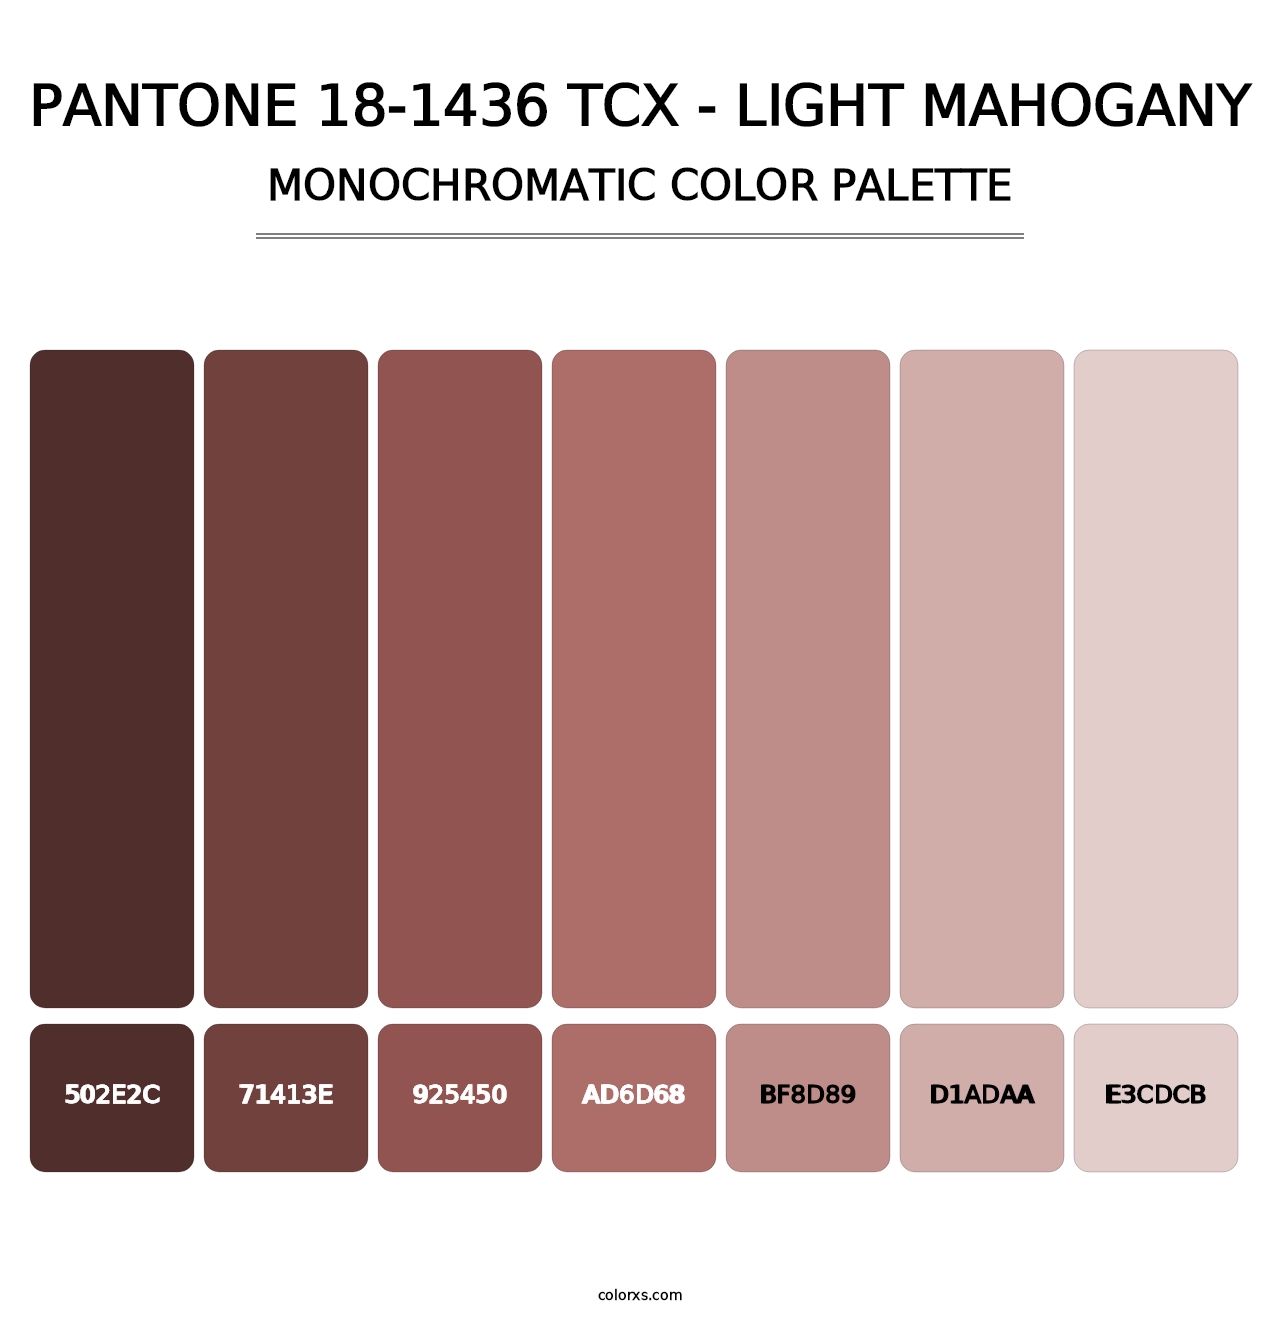 PANTONE 18-1436 TCX - Light Mahogany - Monochromatic Color Palette